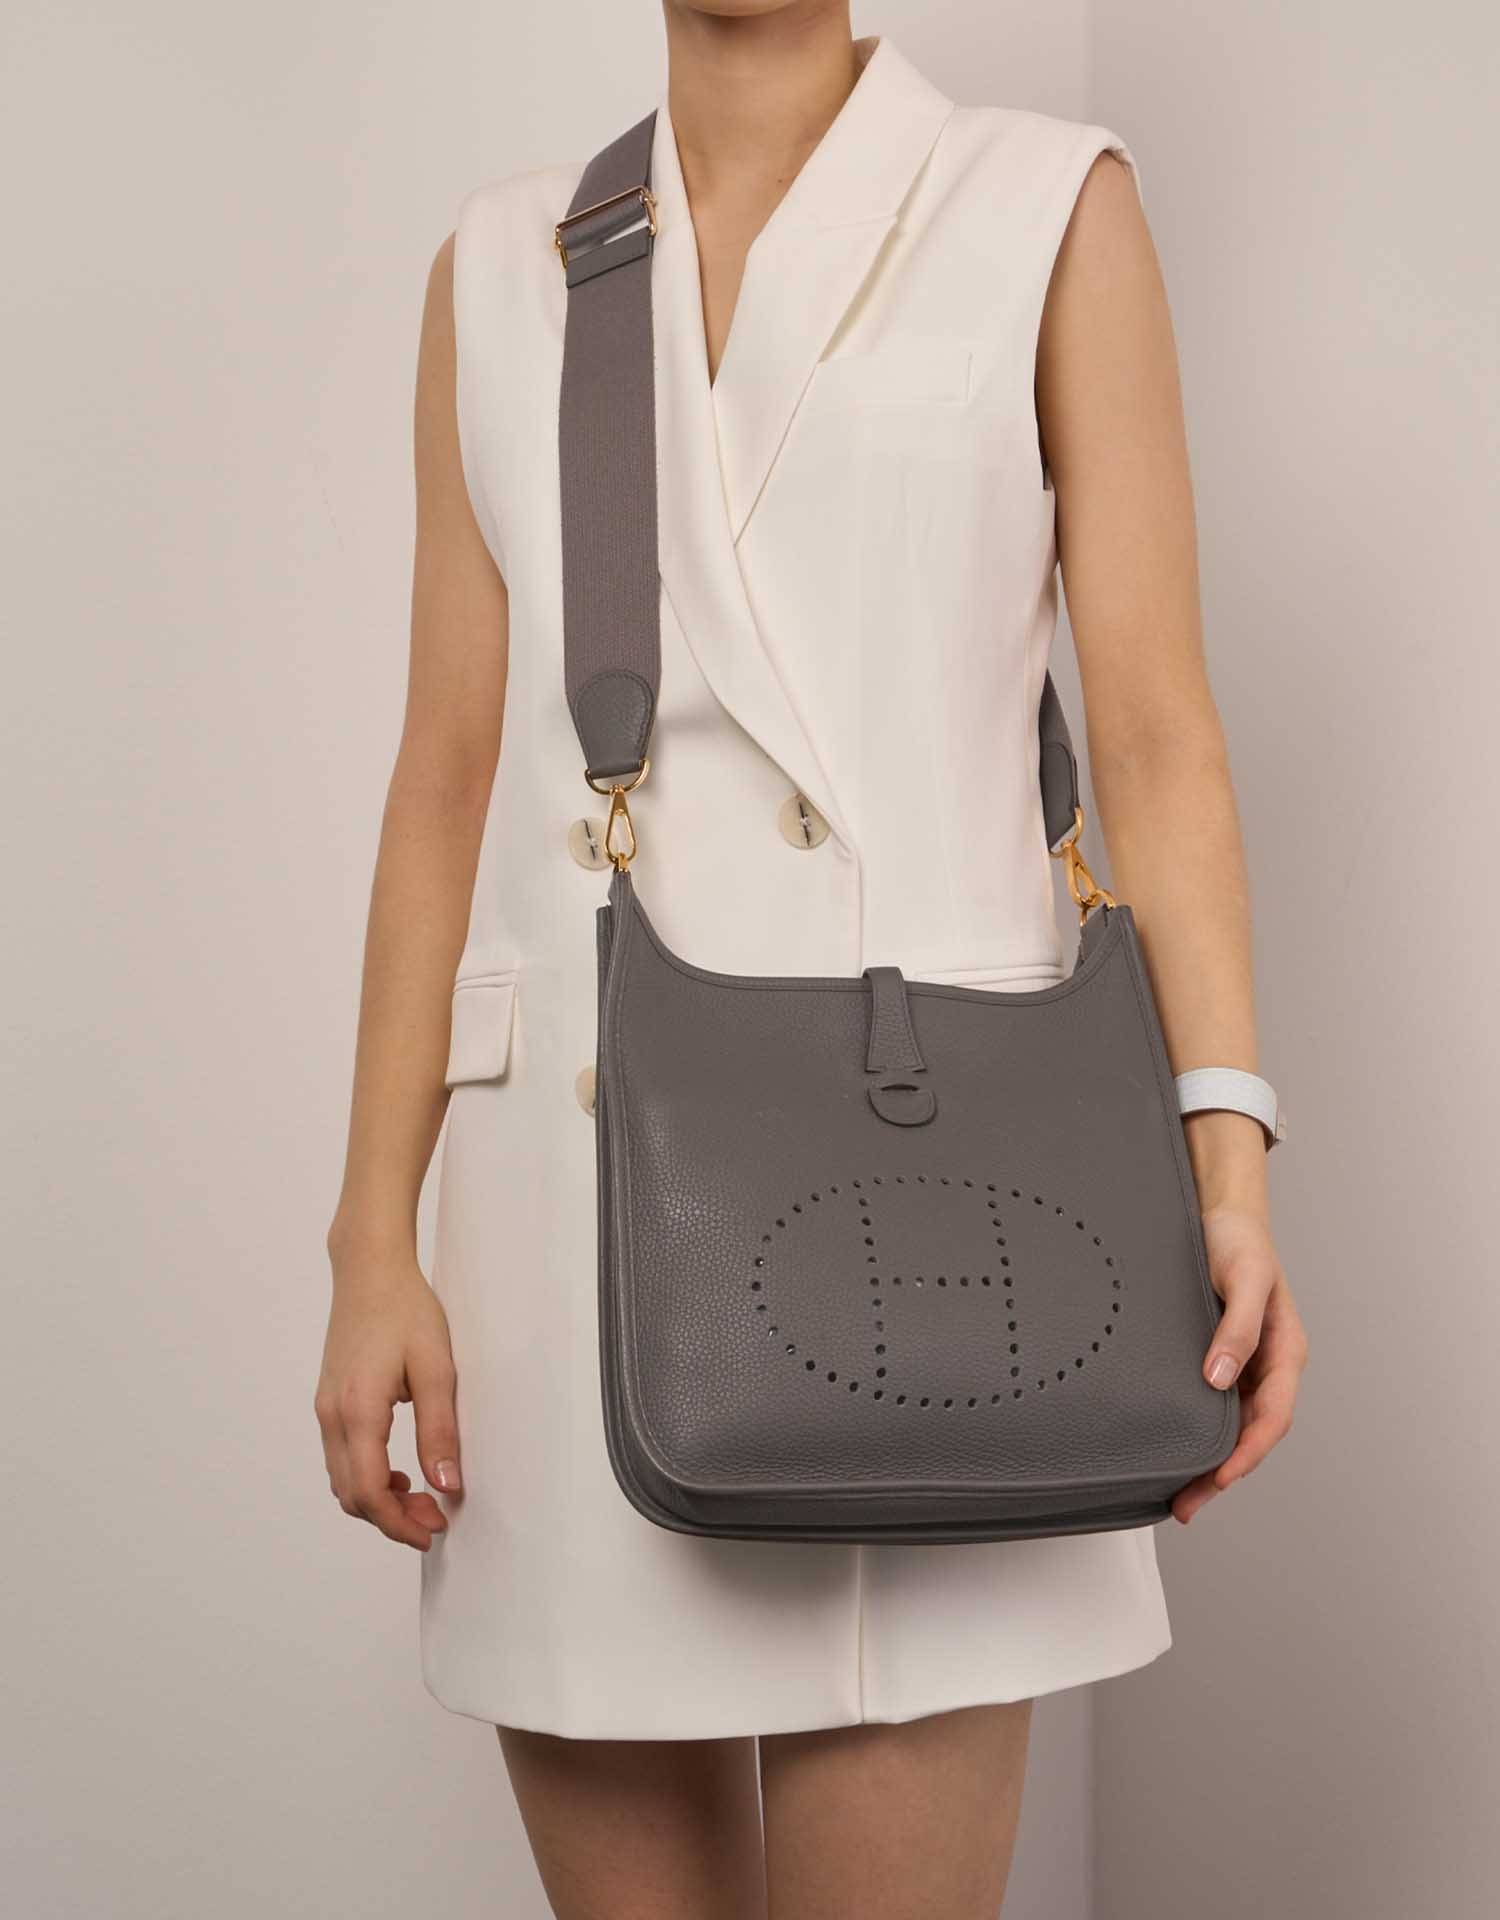 Hermès Evelyne 29 GrisEtain Sizes Worn | Sell your designer bag on Saclab.com